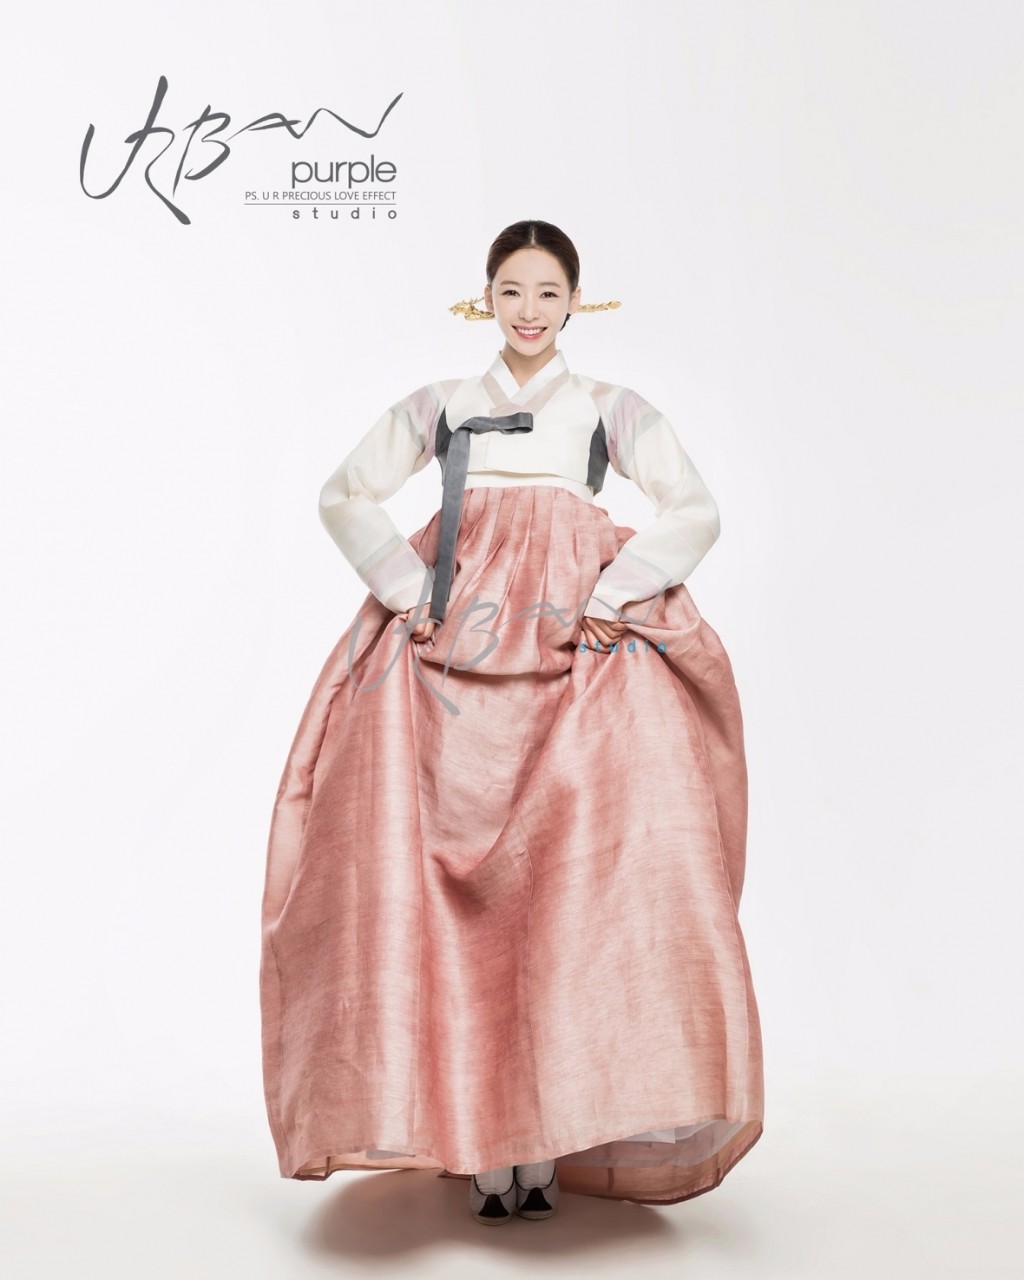 Korean Wedding Photos: Purple Collection 2 by Urban Studio on OneThreeOneFour 24